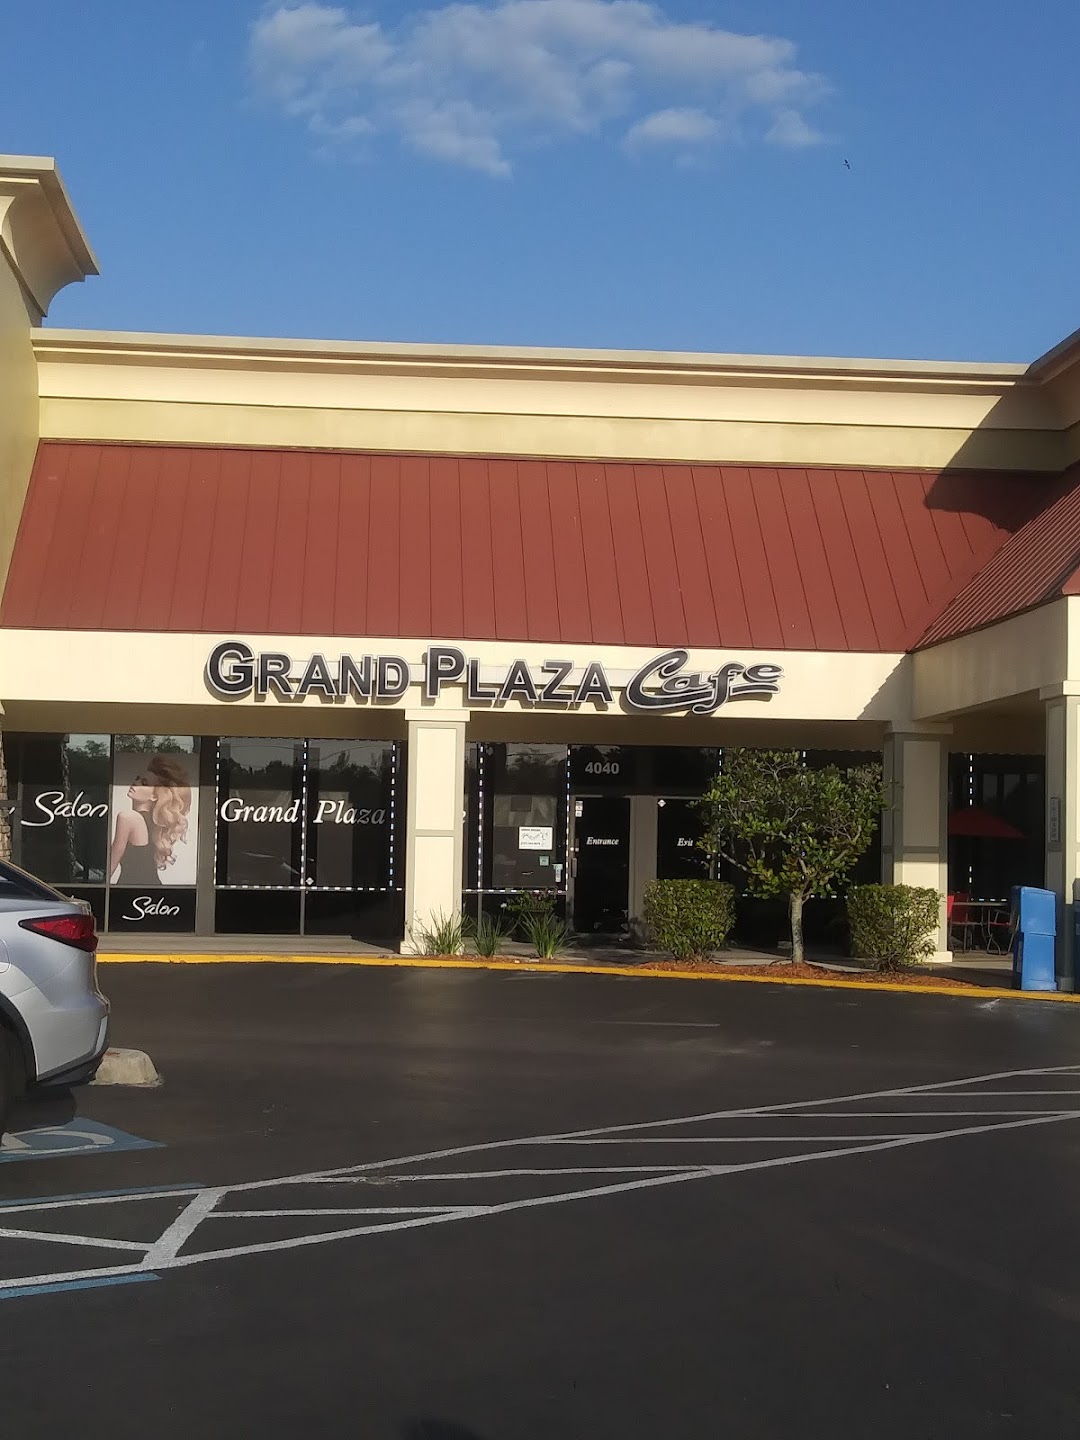 Grand Plaza Cafe